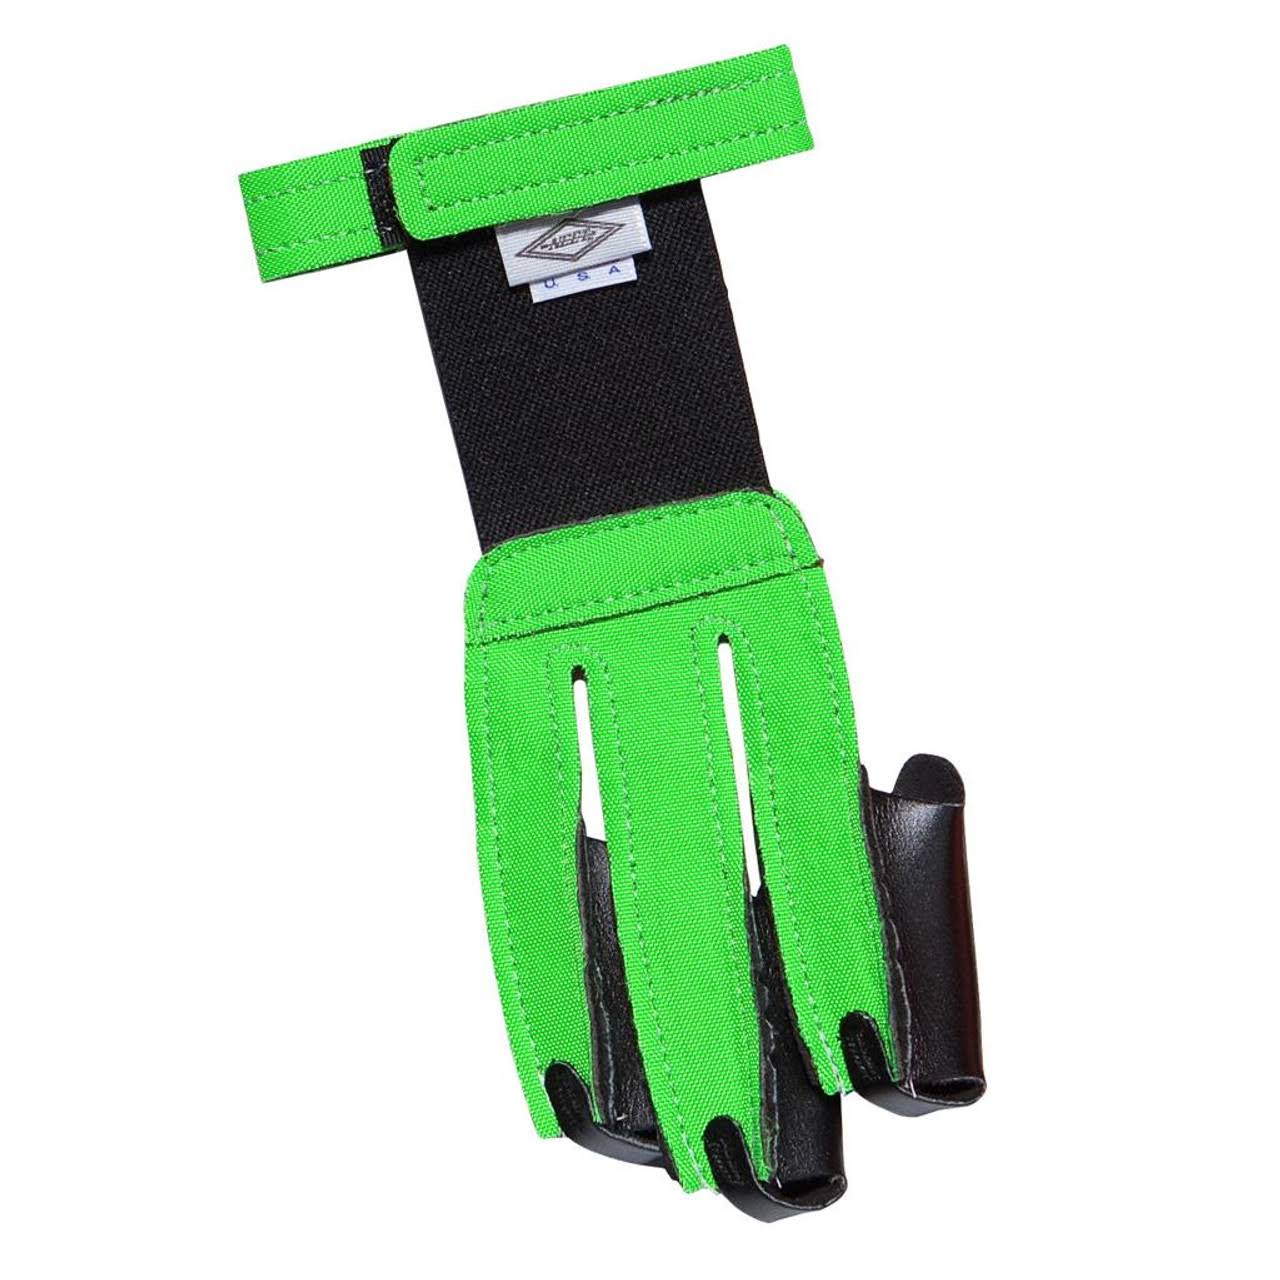 Neet Archery Shooting Glove - Neon Green, Small